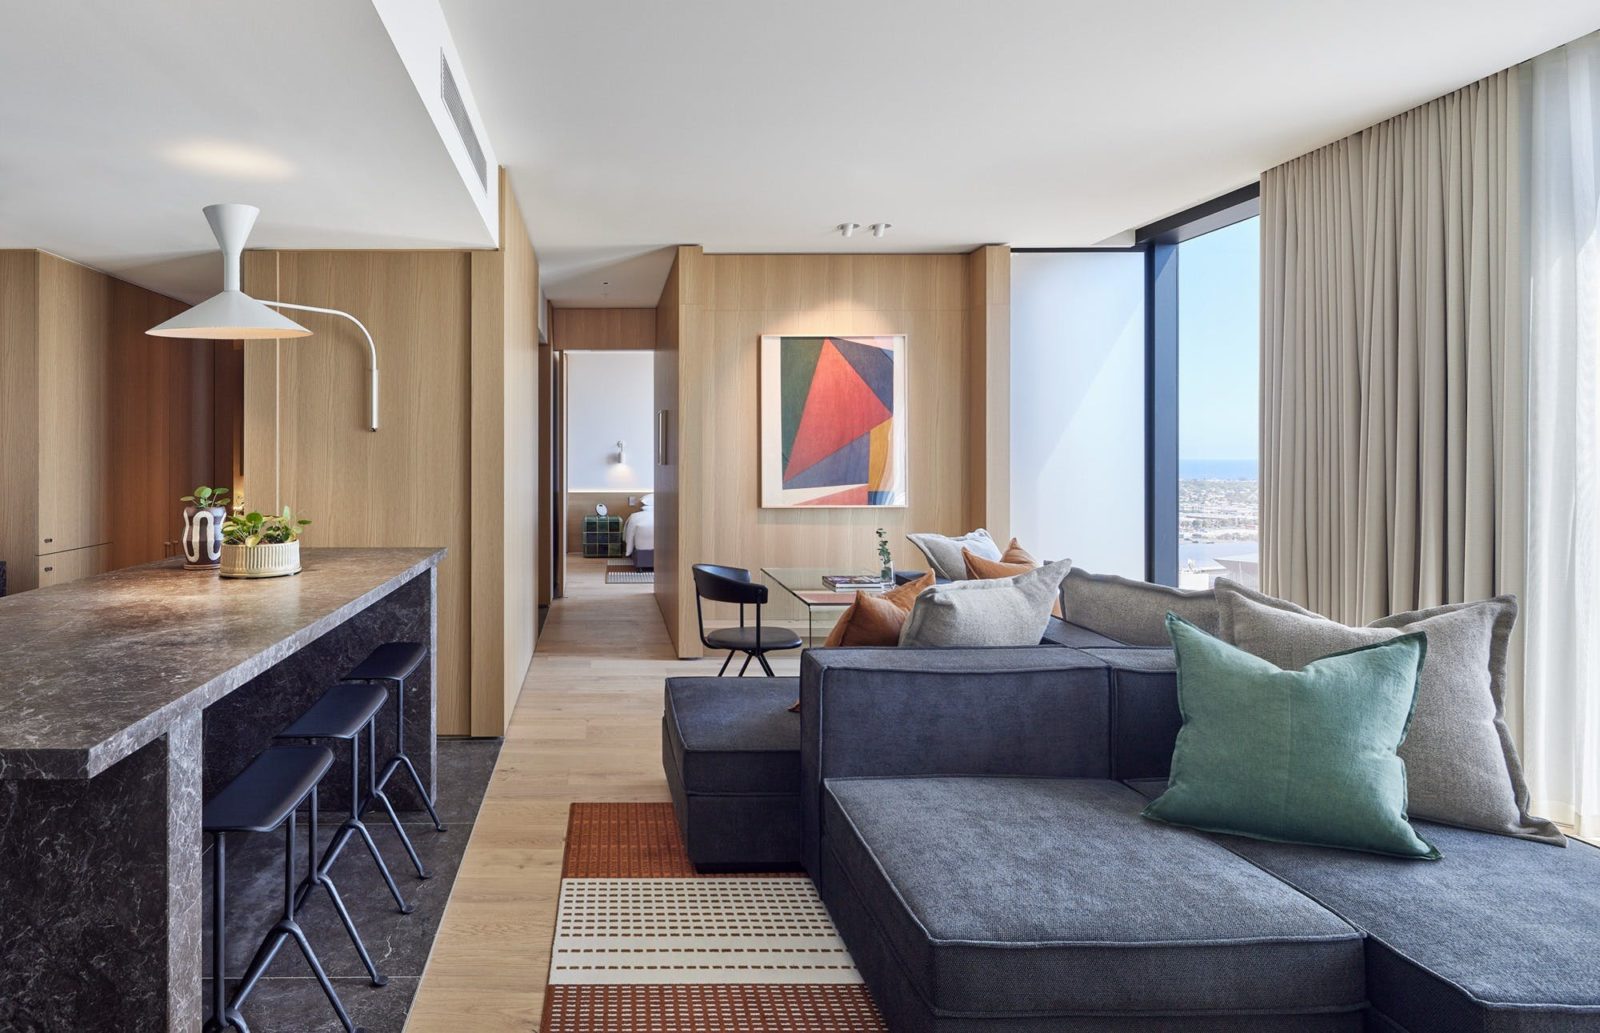 Premiere Suite showing modern styled living room looking towards bedroom